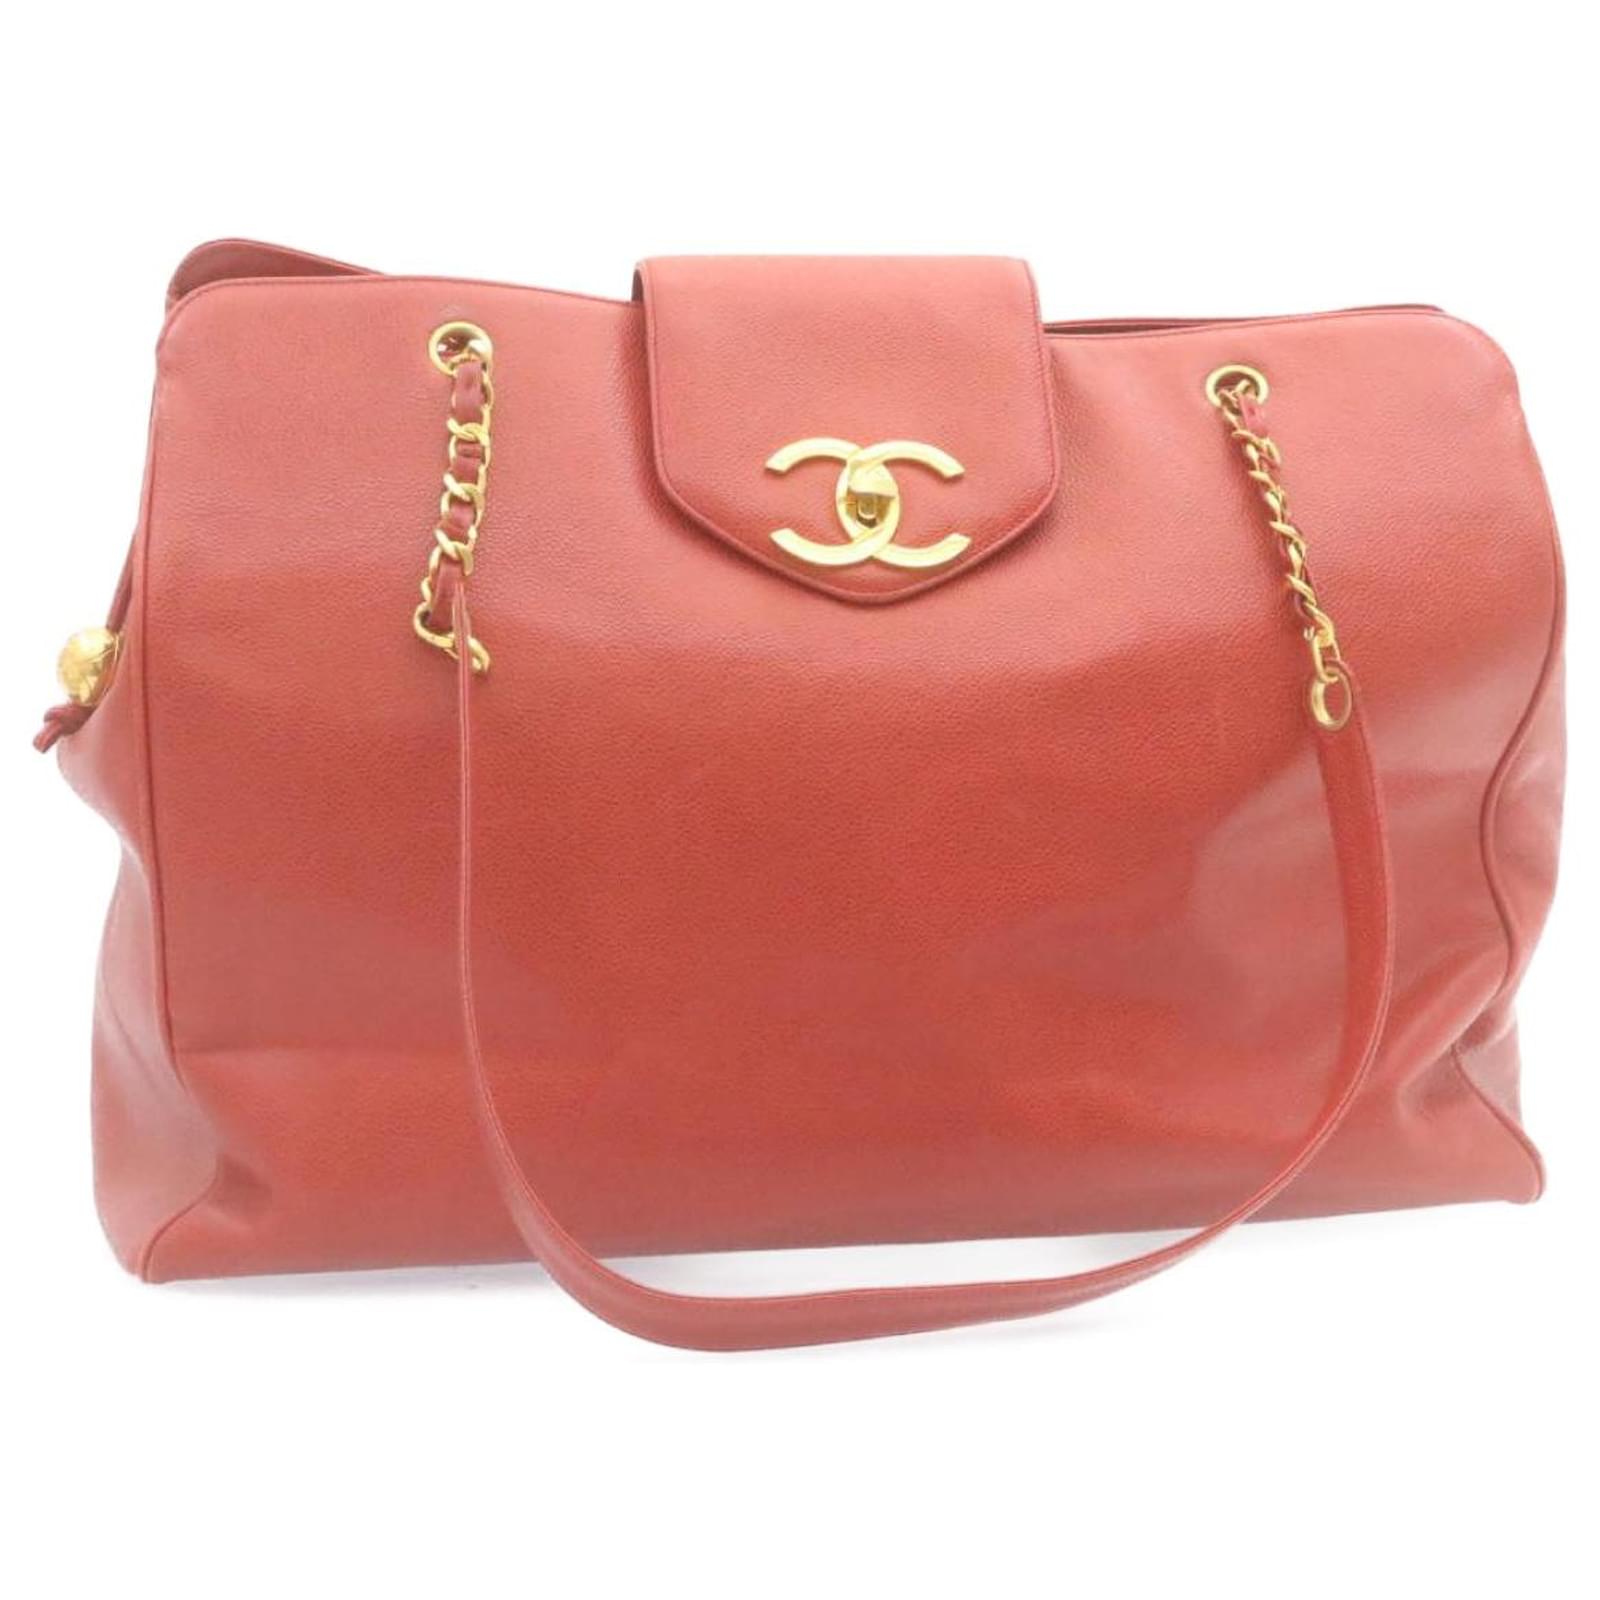 Chanel Vintage Supermodel Tote - Shoulder Bags, Handbags